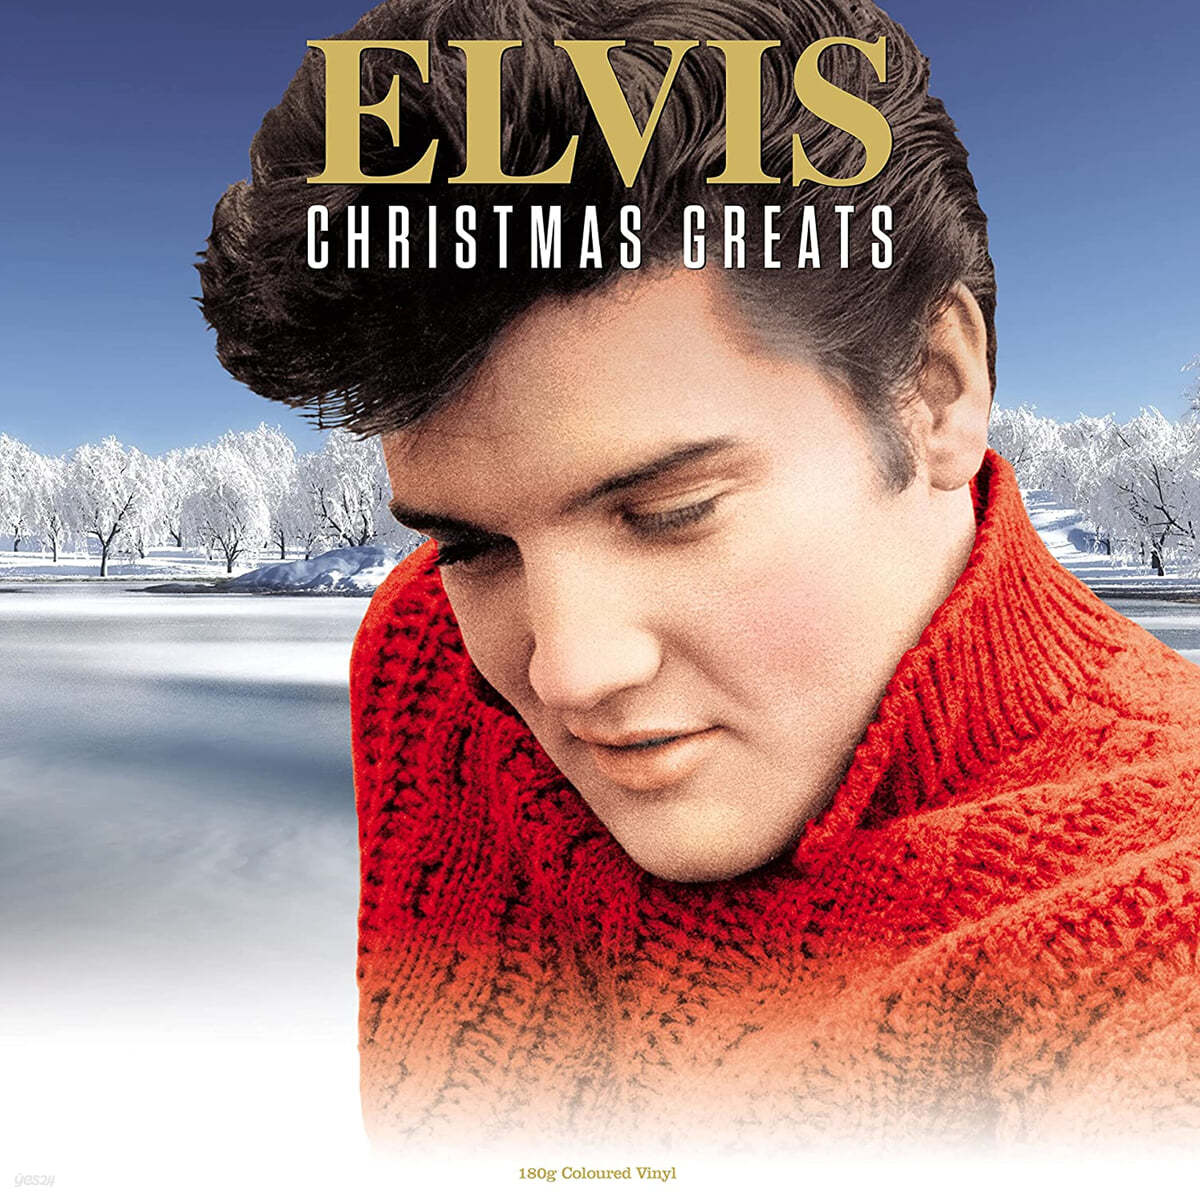 Elvis Presley (엘비스 프레슬리) - Christmas Greats [레드 컬러 LP]